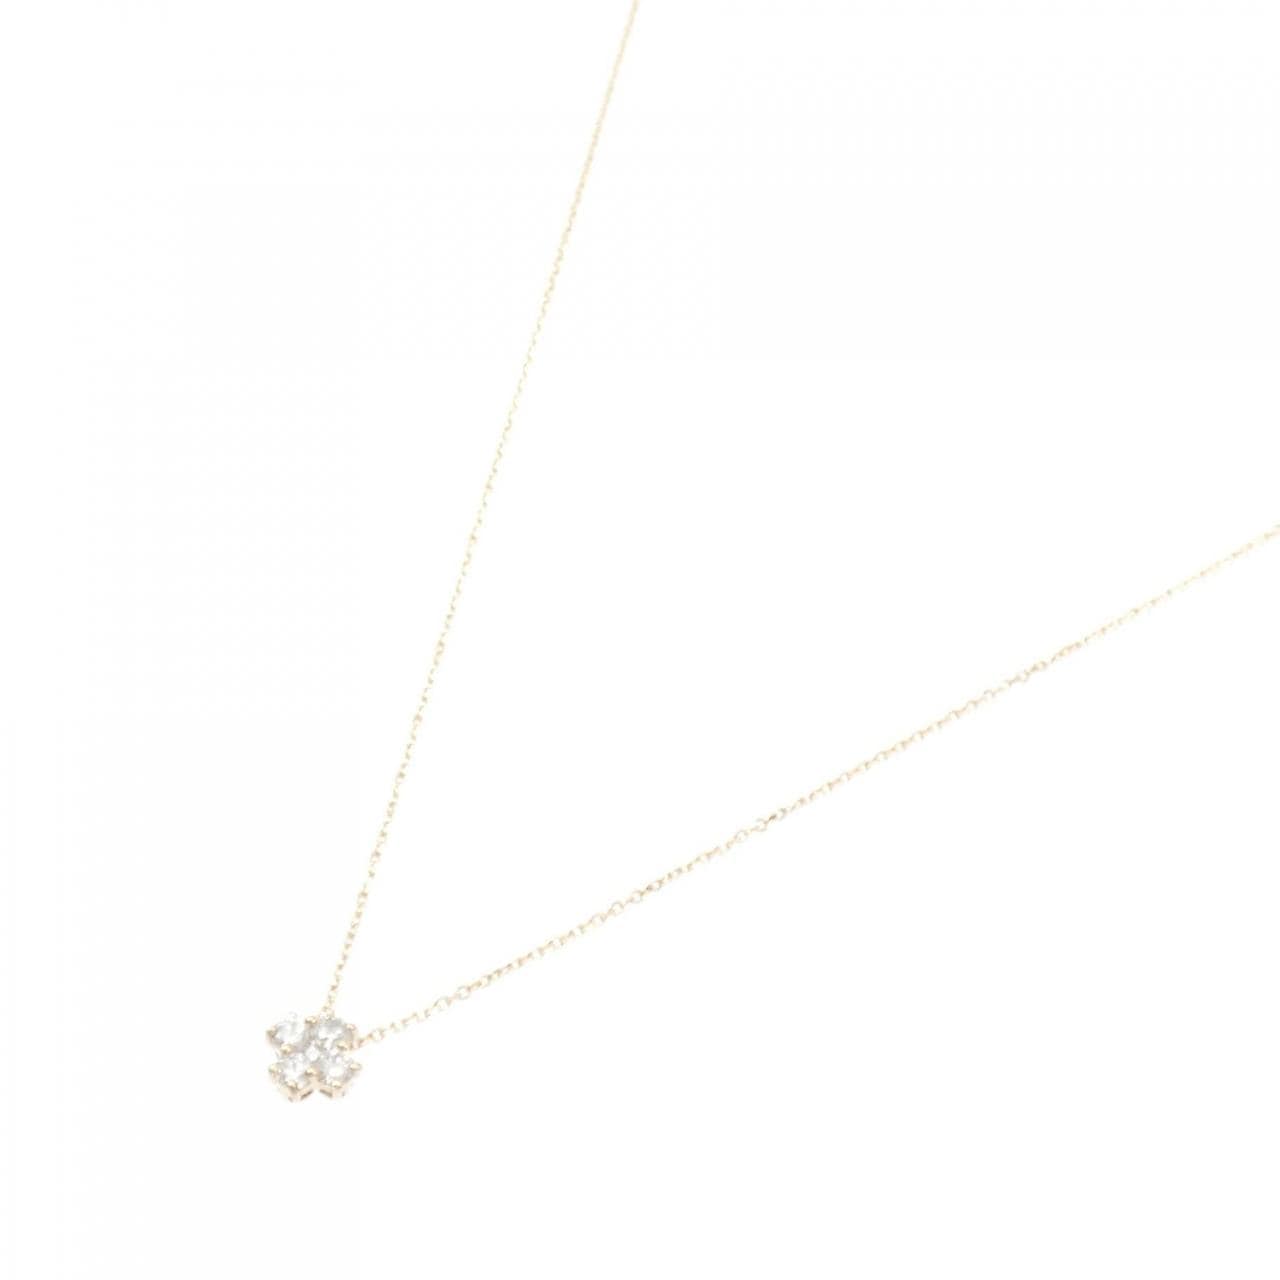 K18PG cross Diamond necklace 0.20CT